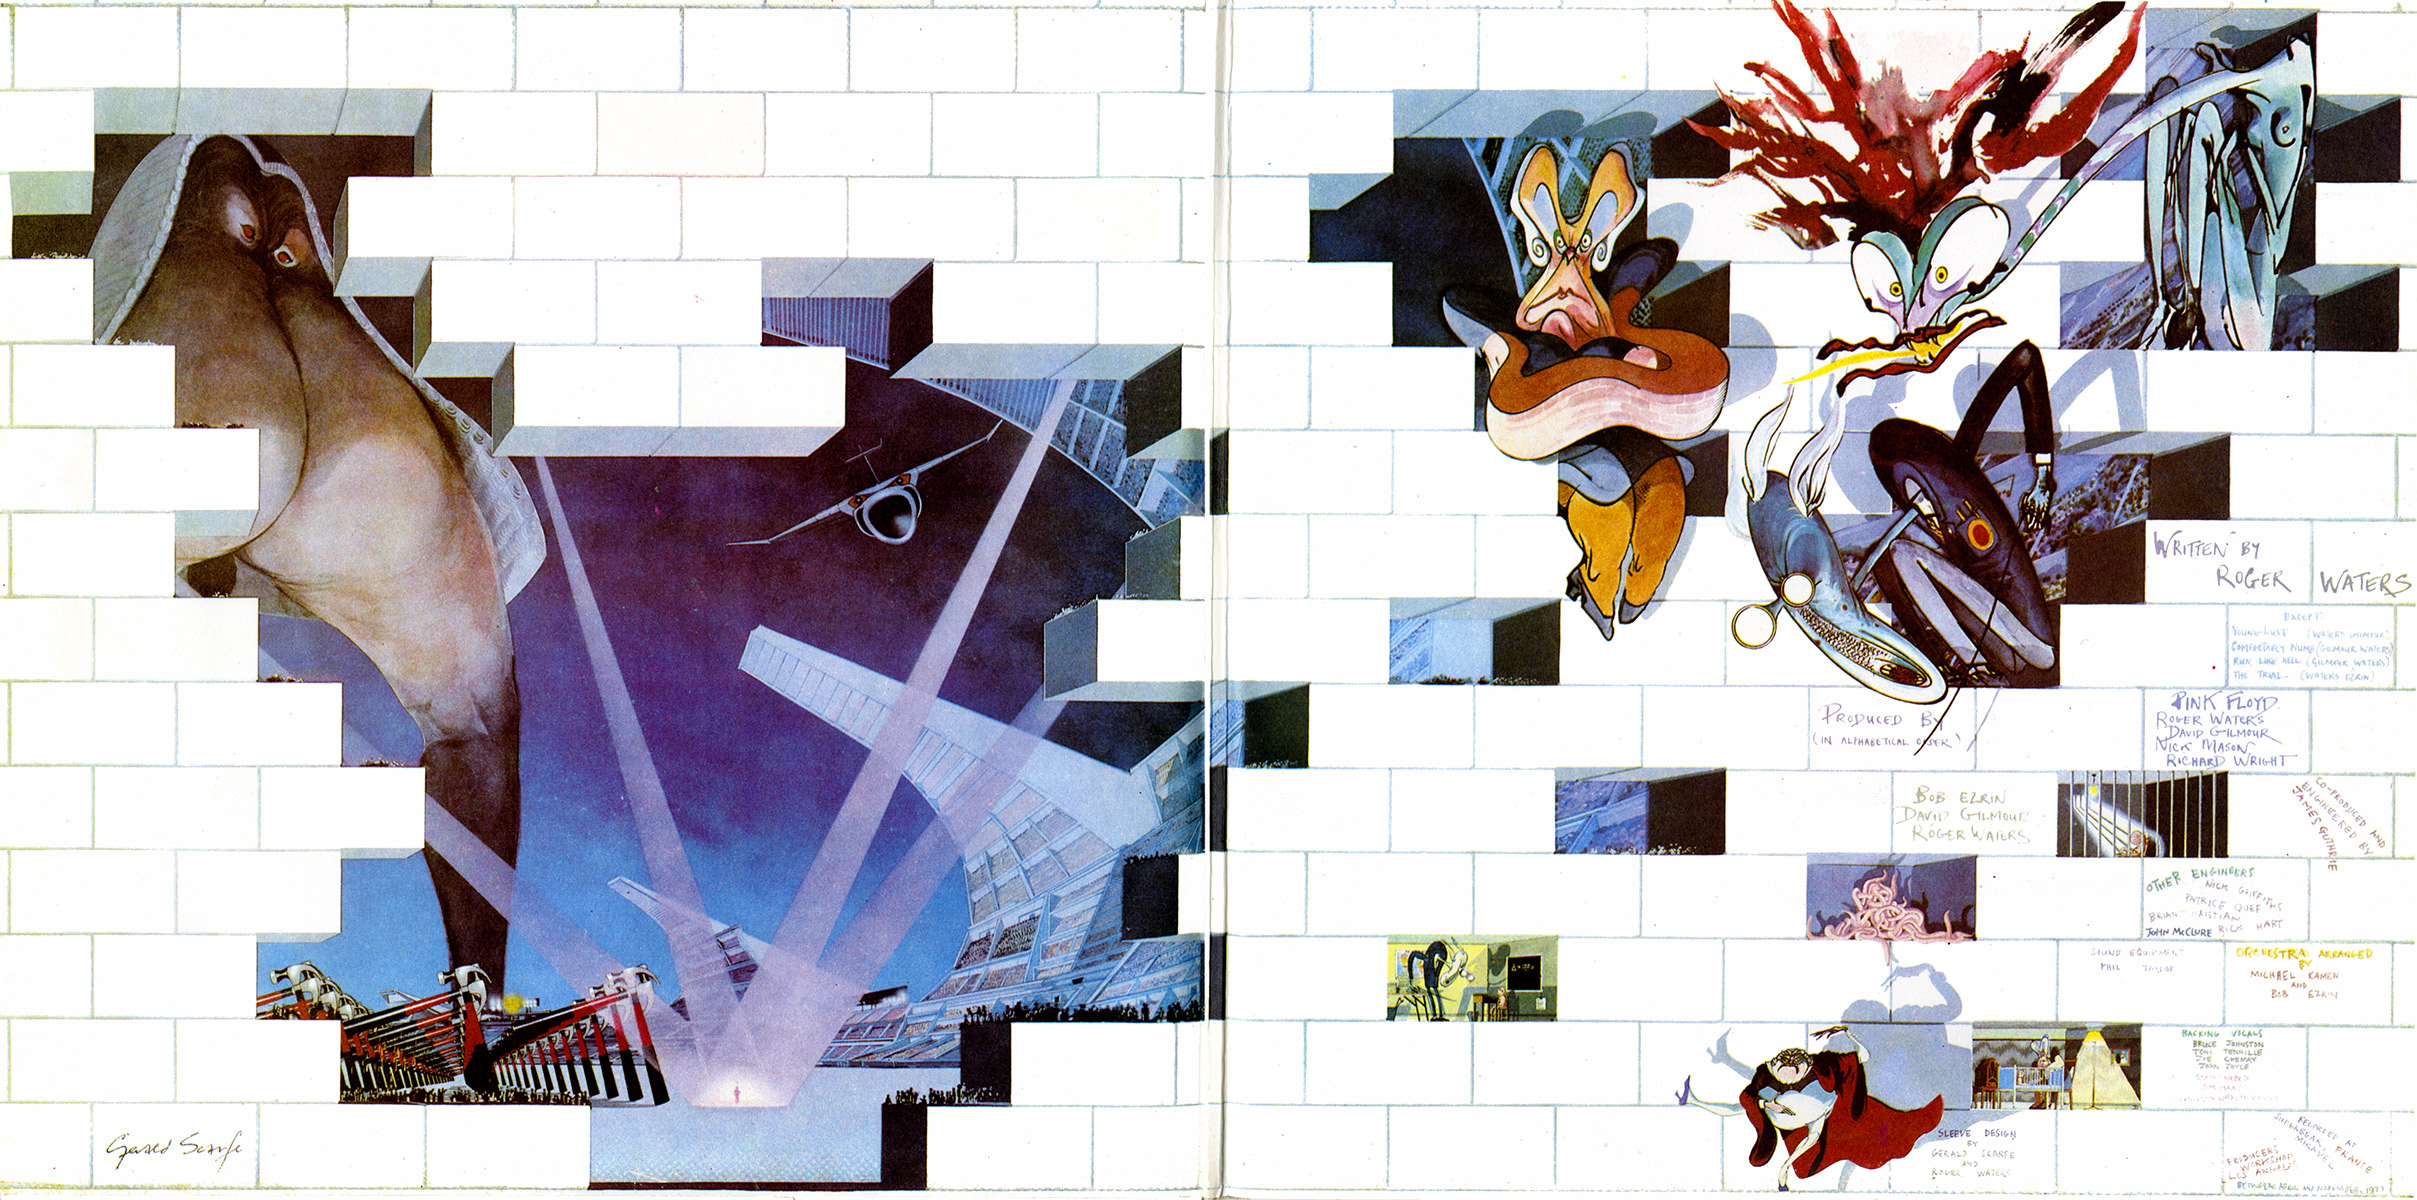 Pink Floyd Cartoon The Wall - 2417x1200 Wallpaper 